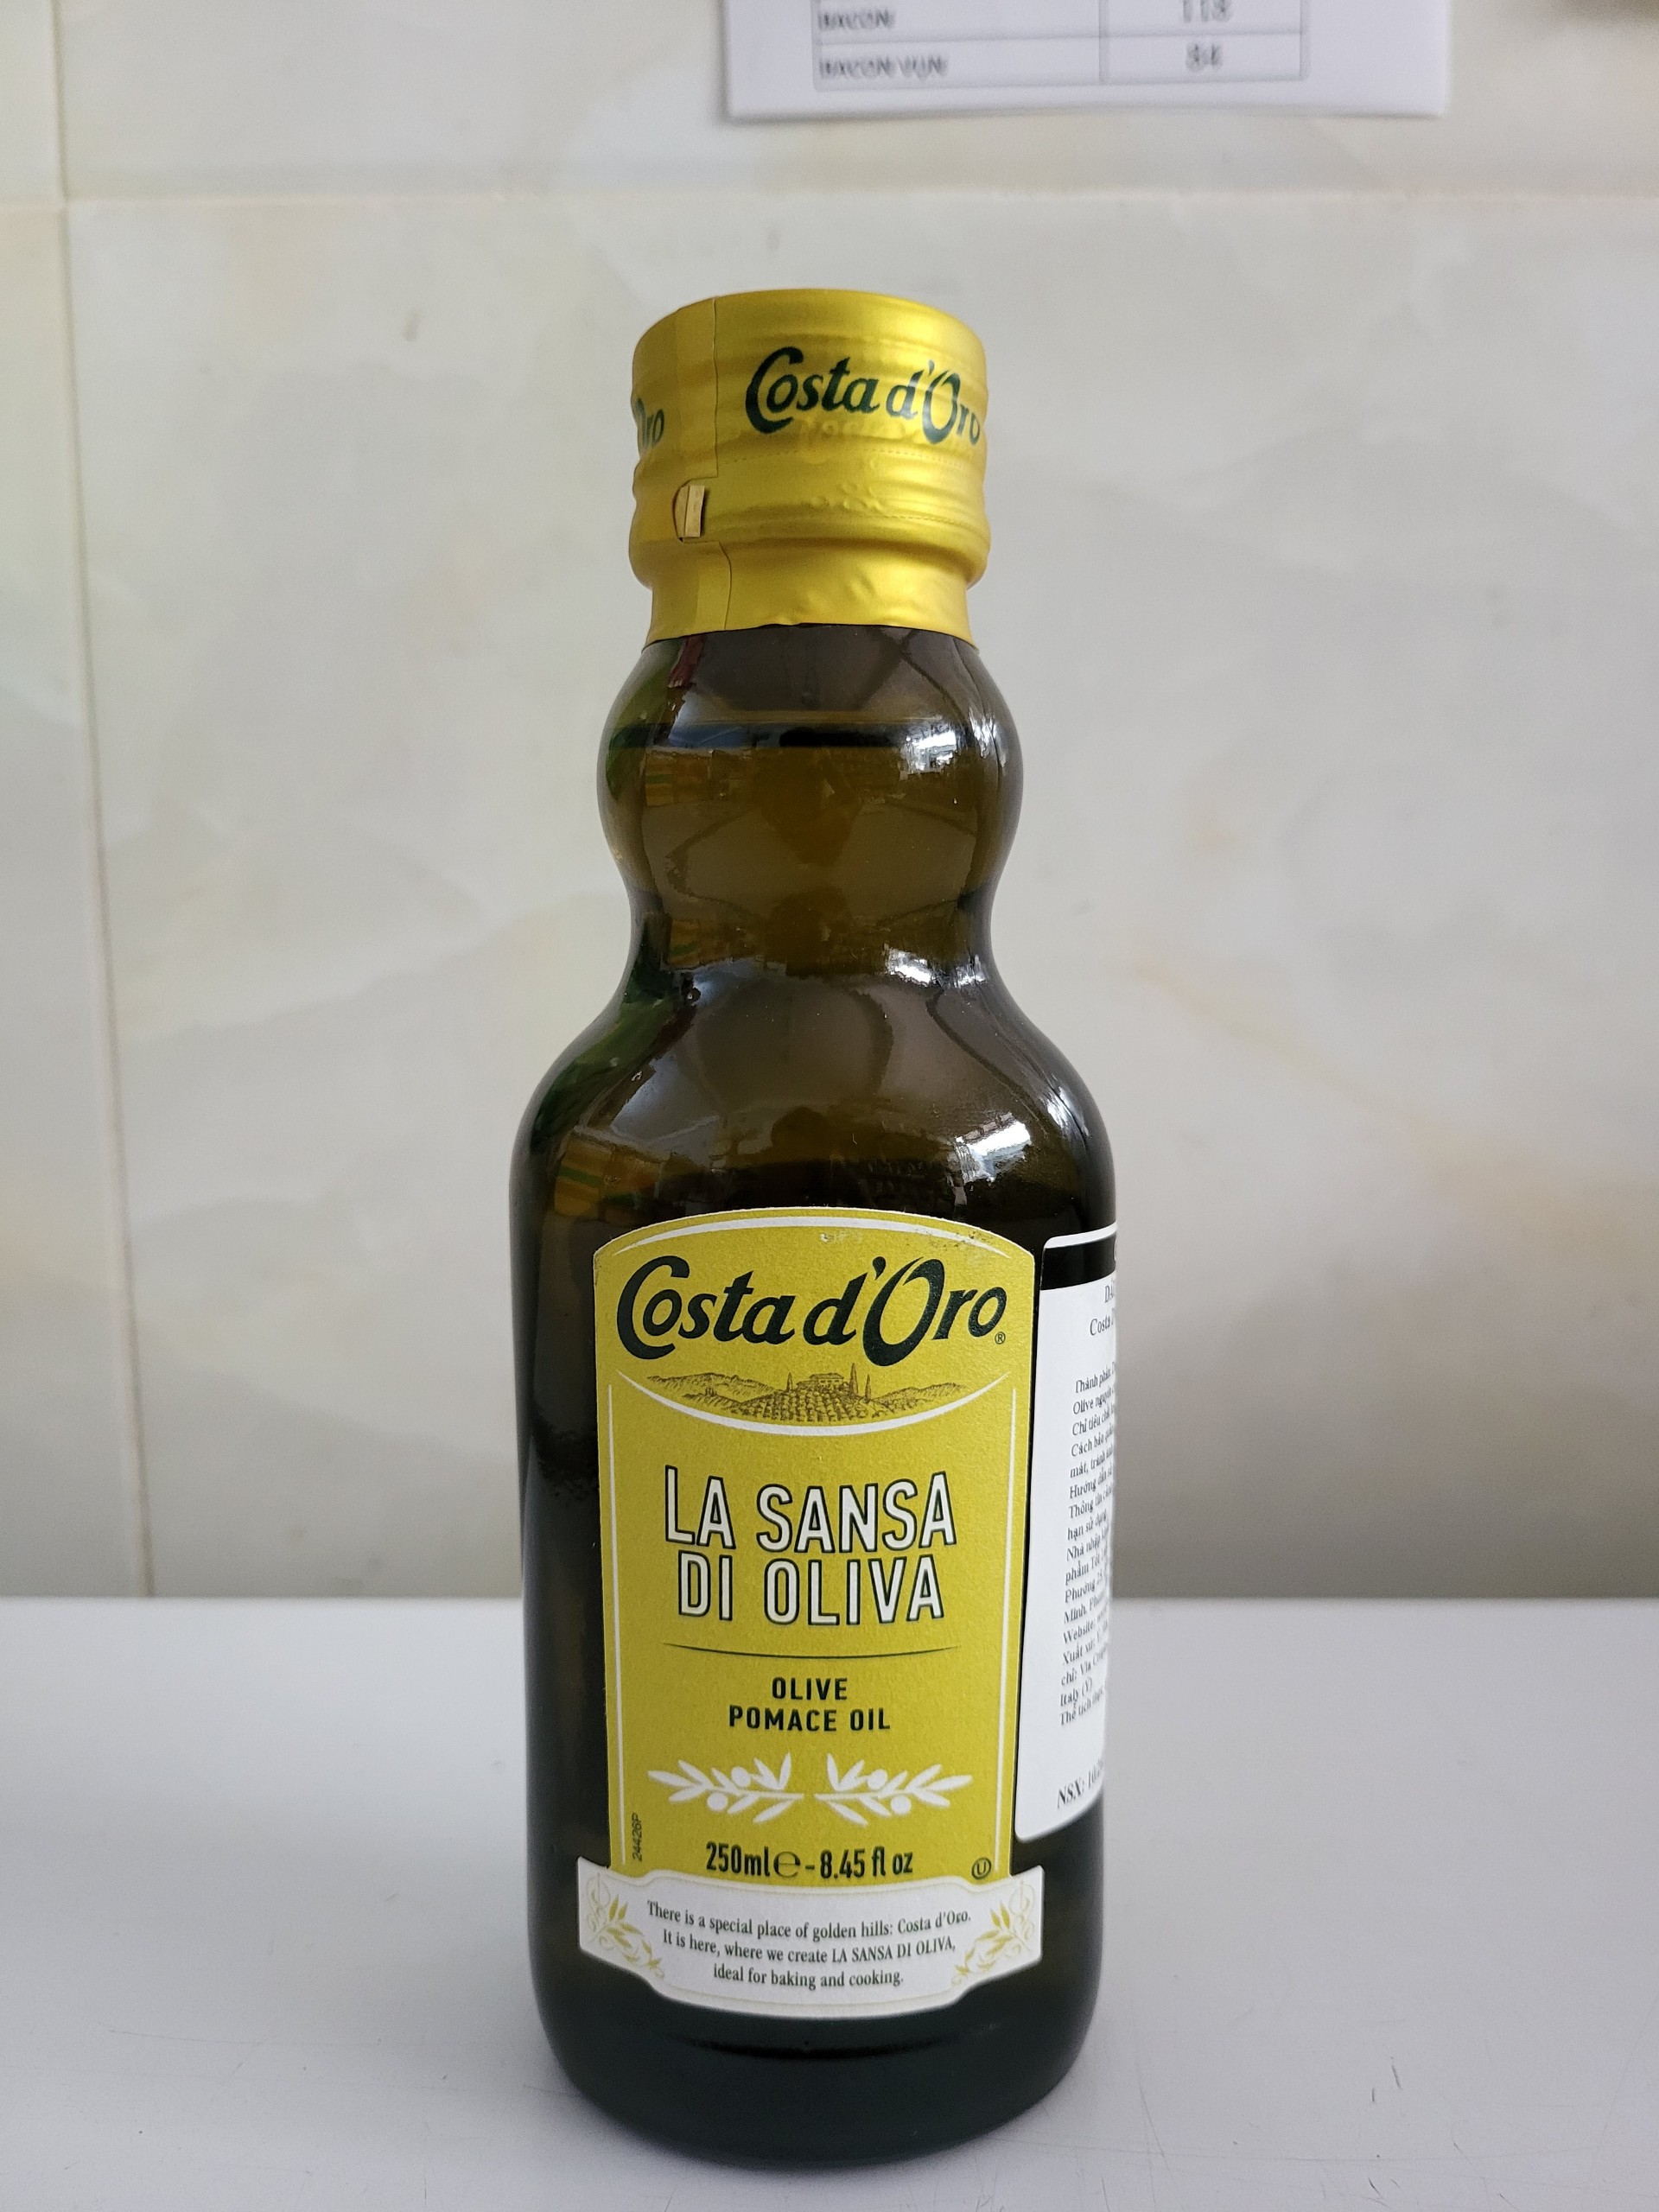 [Chai nhỏ 250ml - POMACE] DẦU Ô LIU TINH CHẾ [Italia] COSTA D ORO Pomace Olive Oil (halal) thumbnail